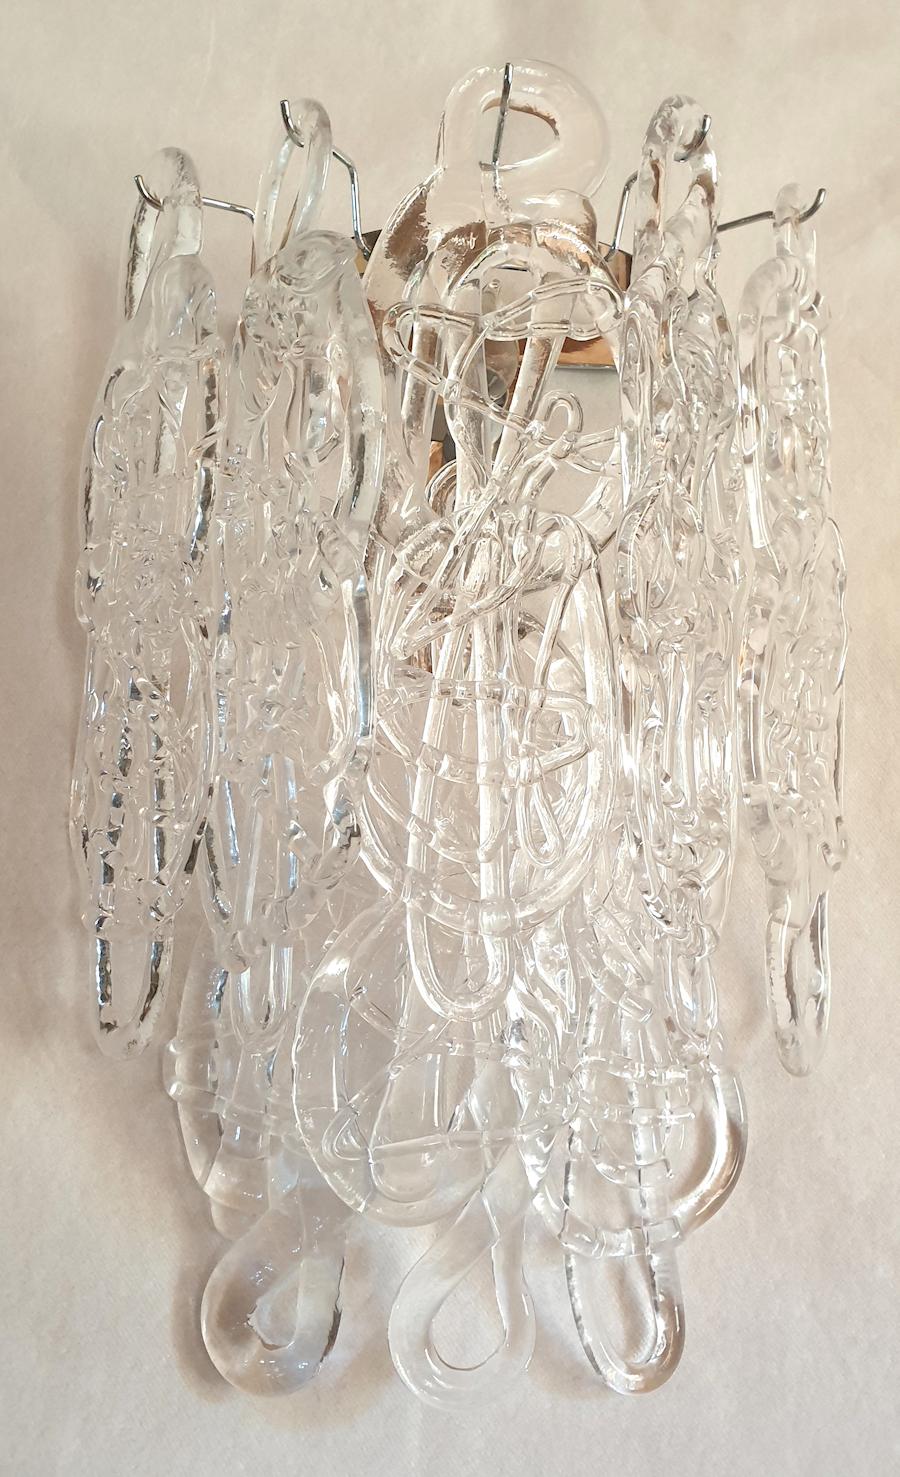 Italian Mid Century Modern Murano Glass Sconces, by Mazzega - a pair